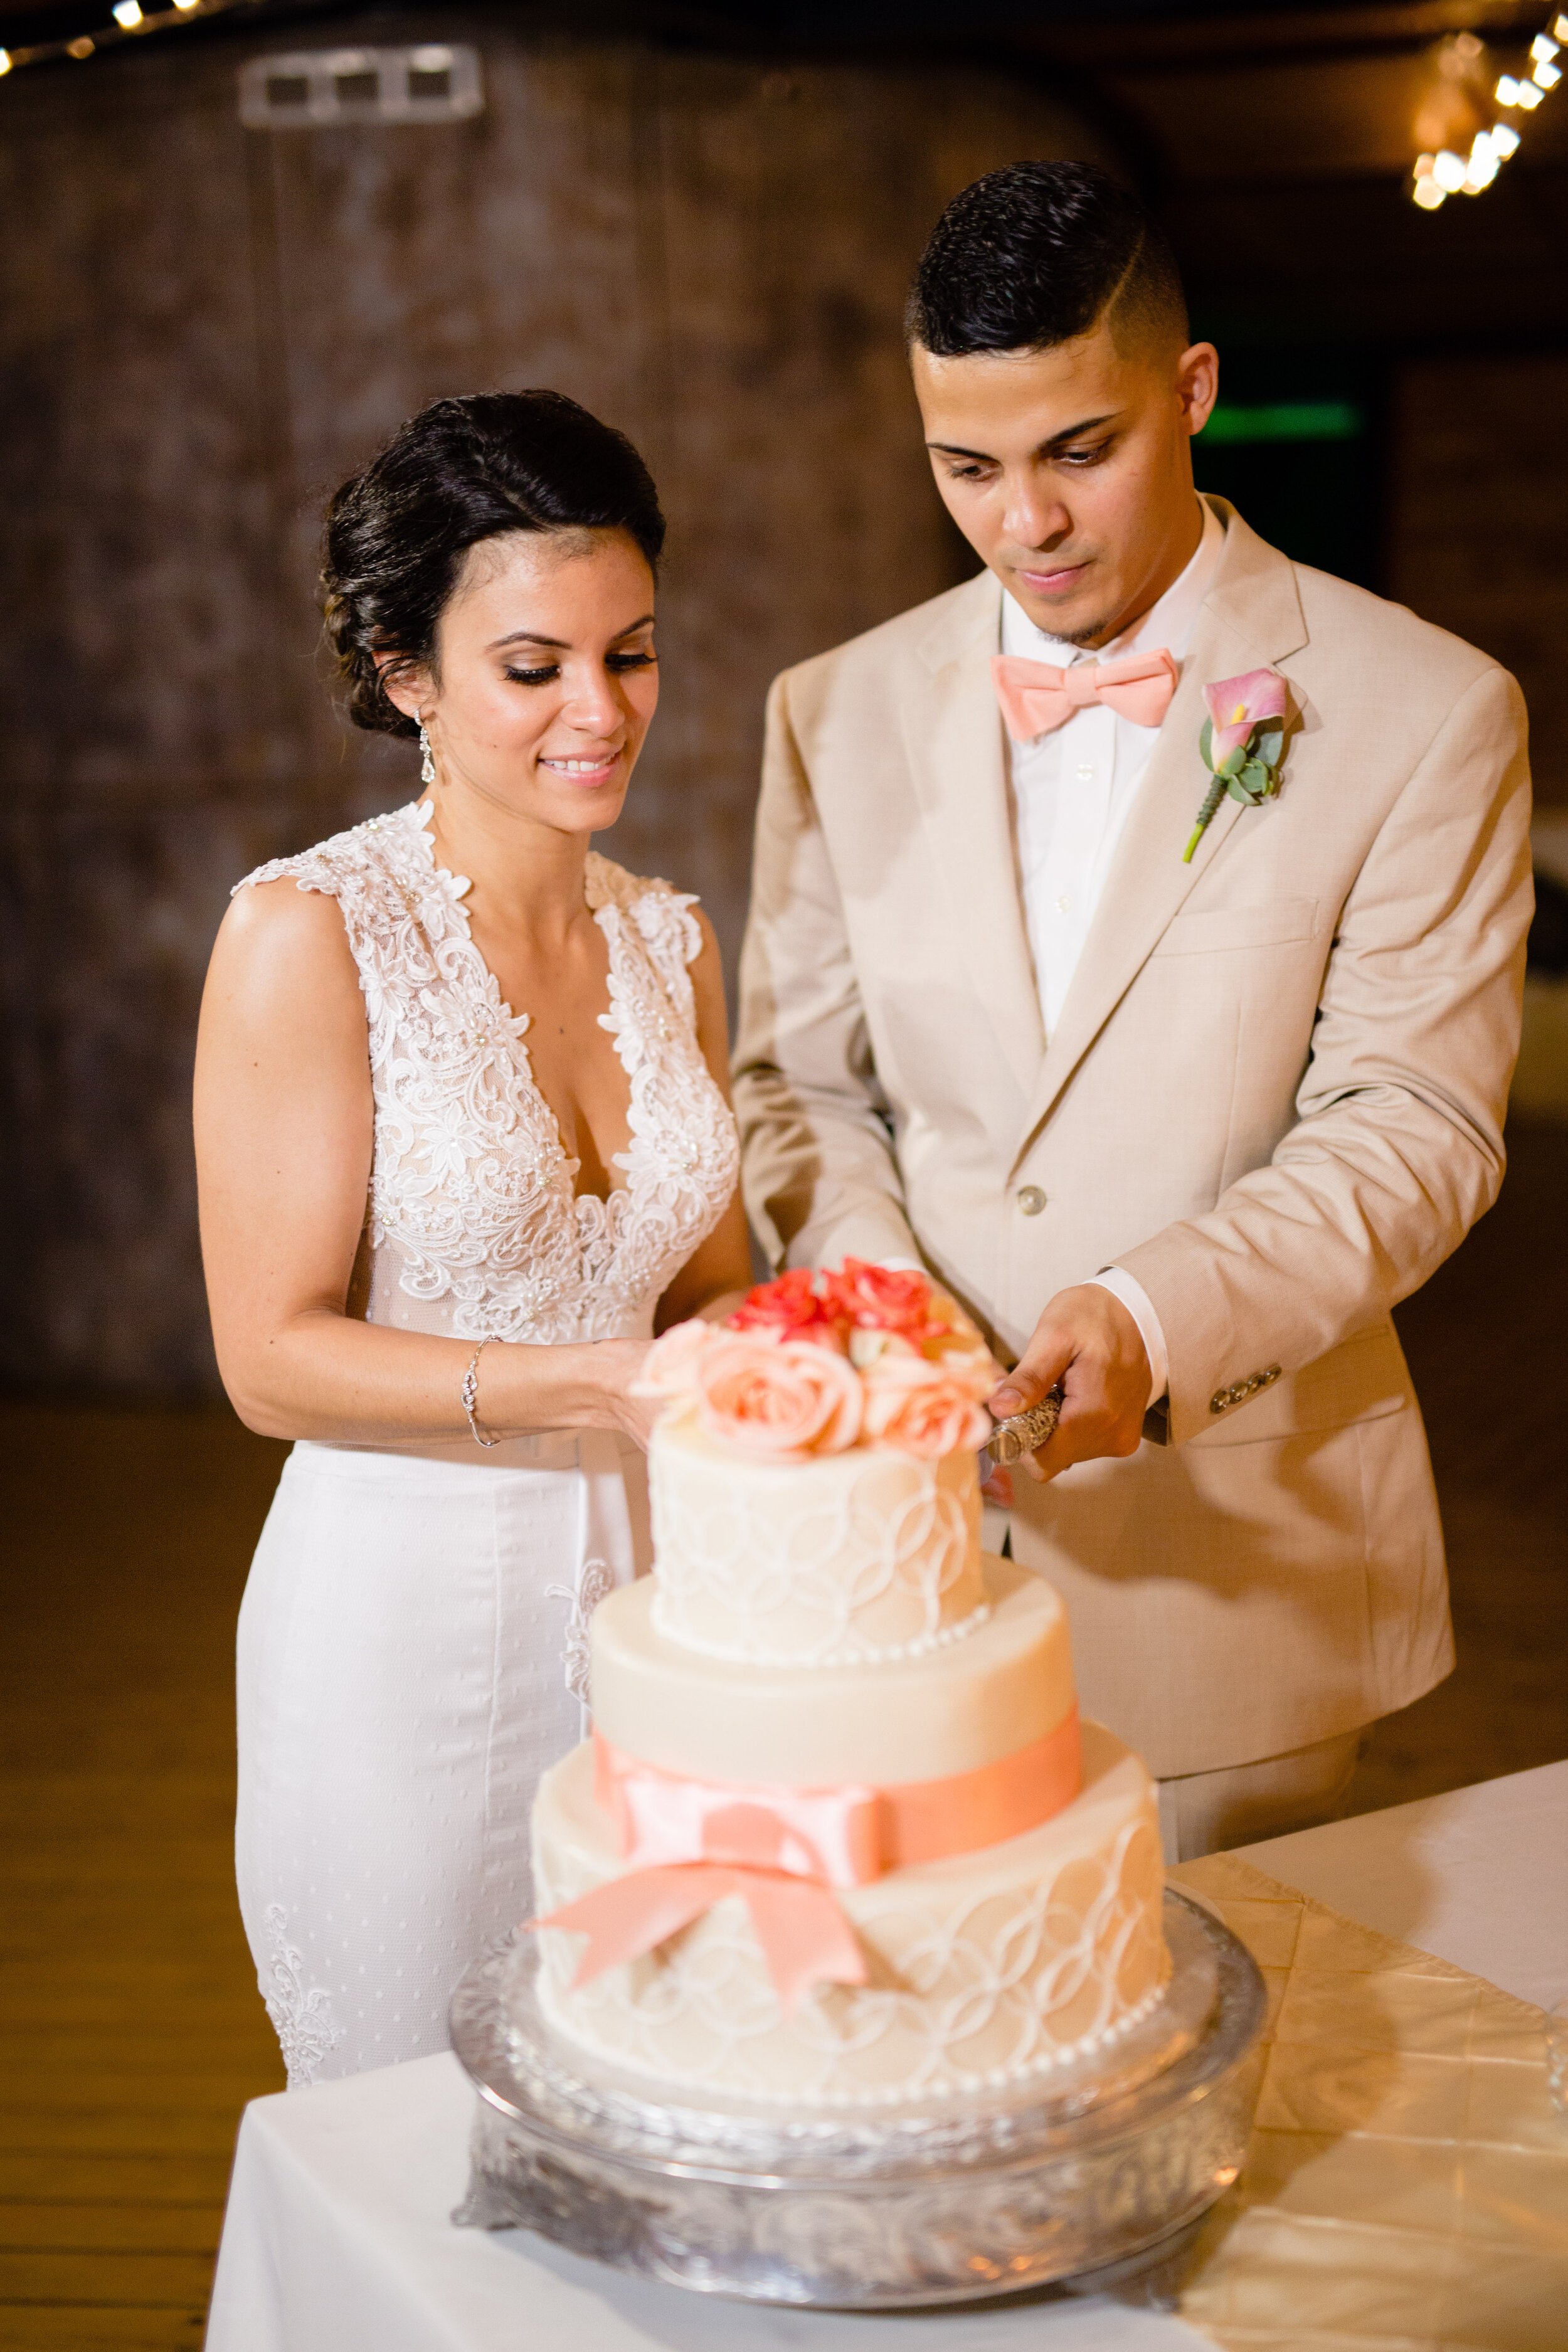 wedding-couple-cutting-cake-bride-and-groom-wedding-cake.jpg